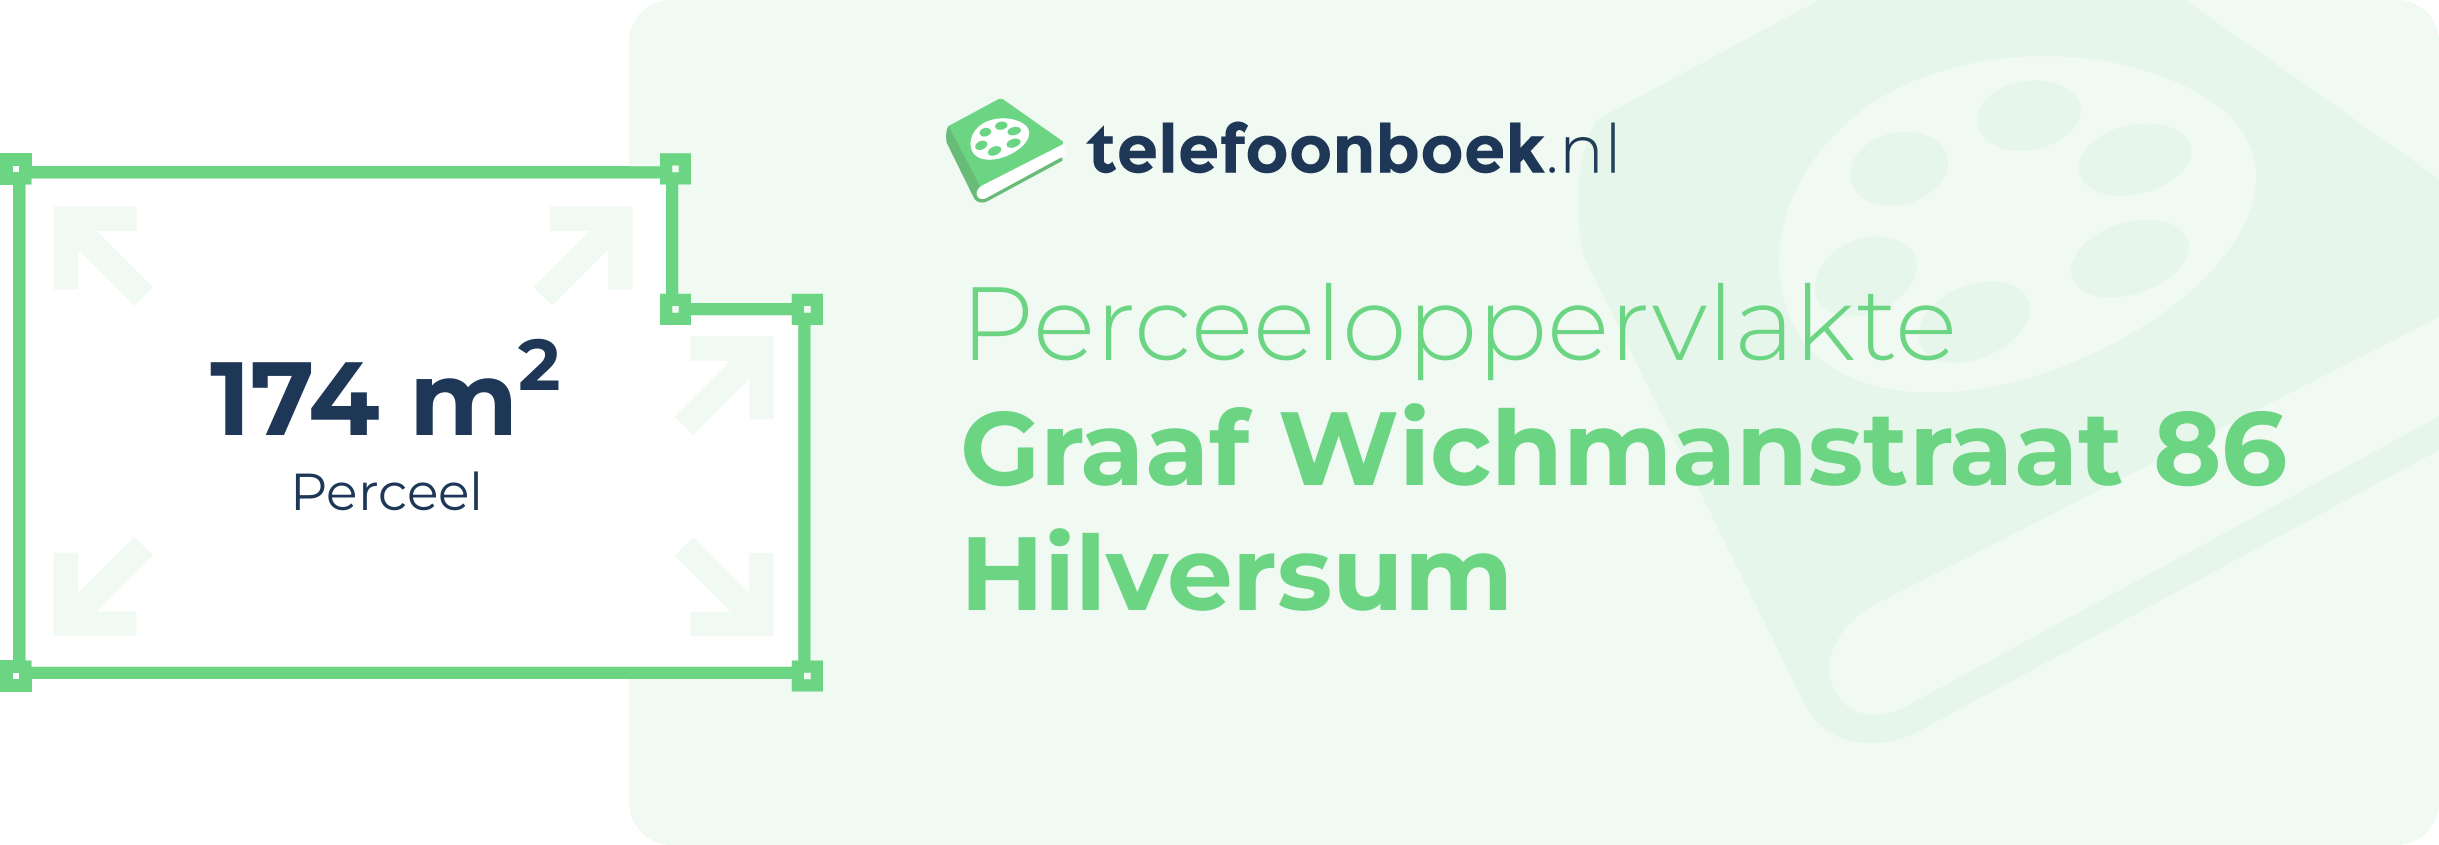 Perceeloppervlakte Graaf Wichmanstraat 86 Hilversum